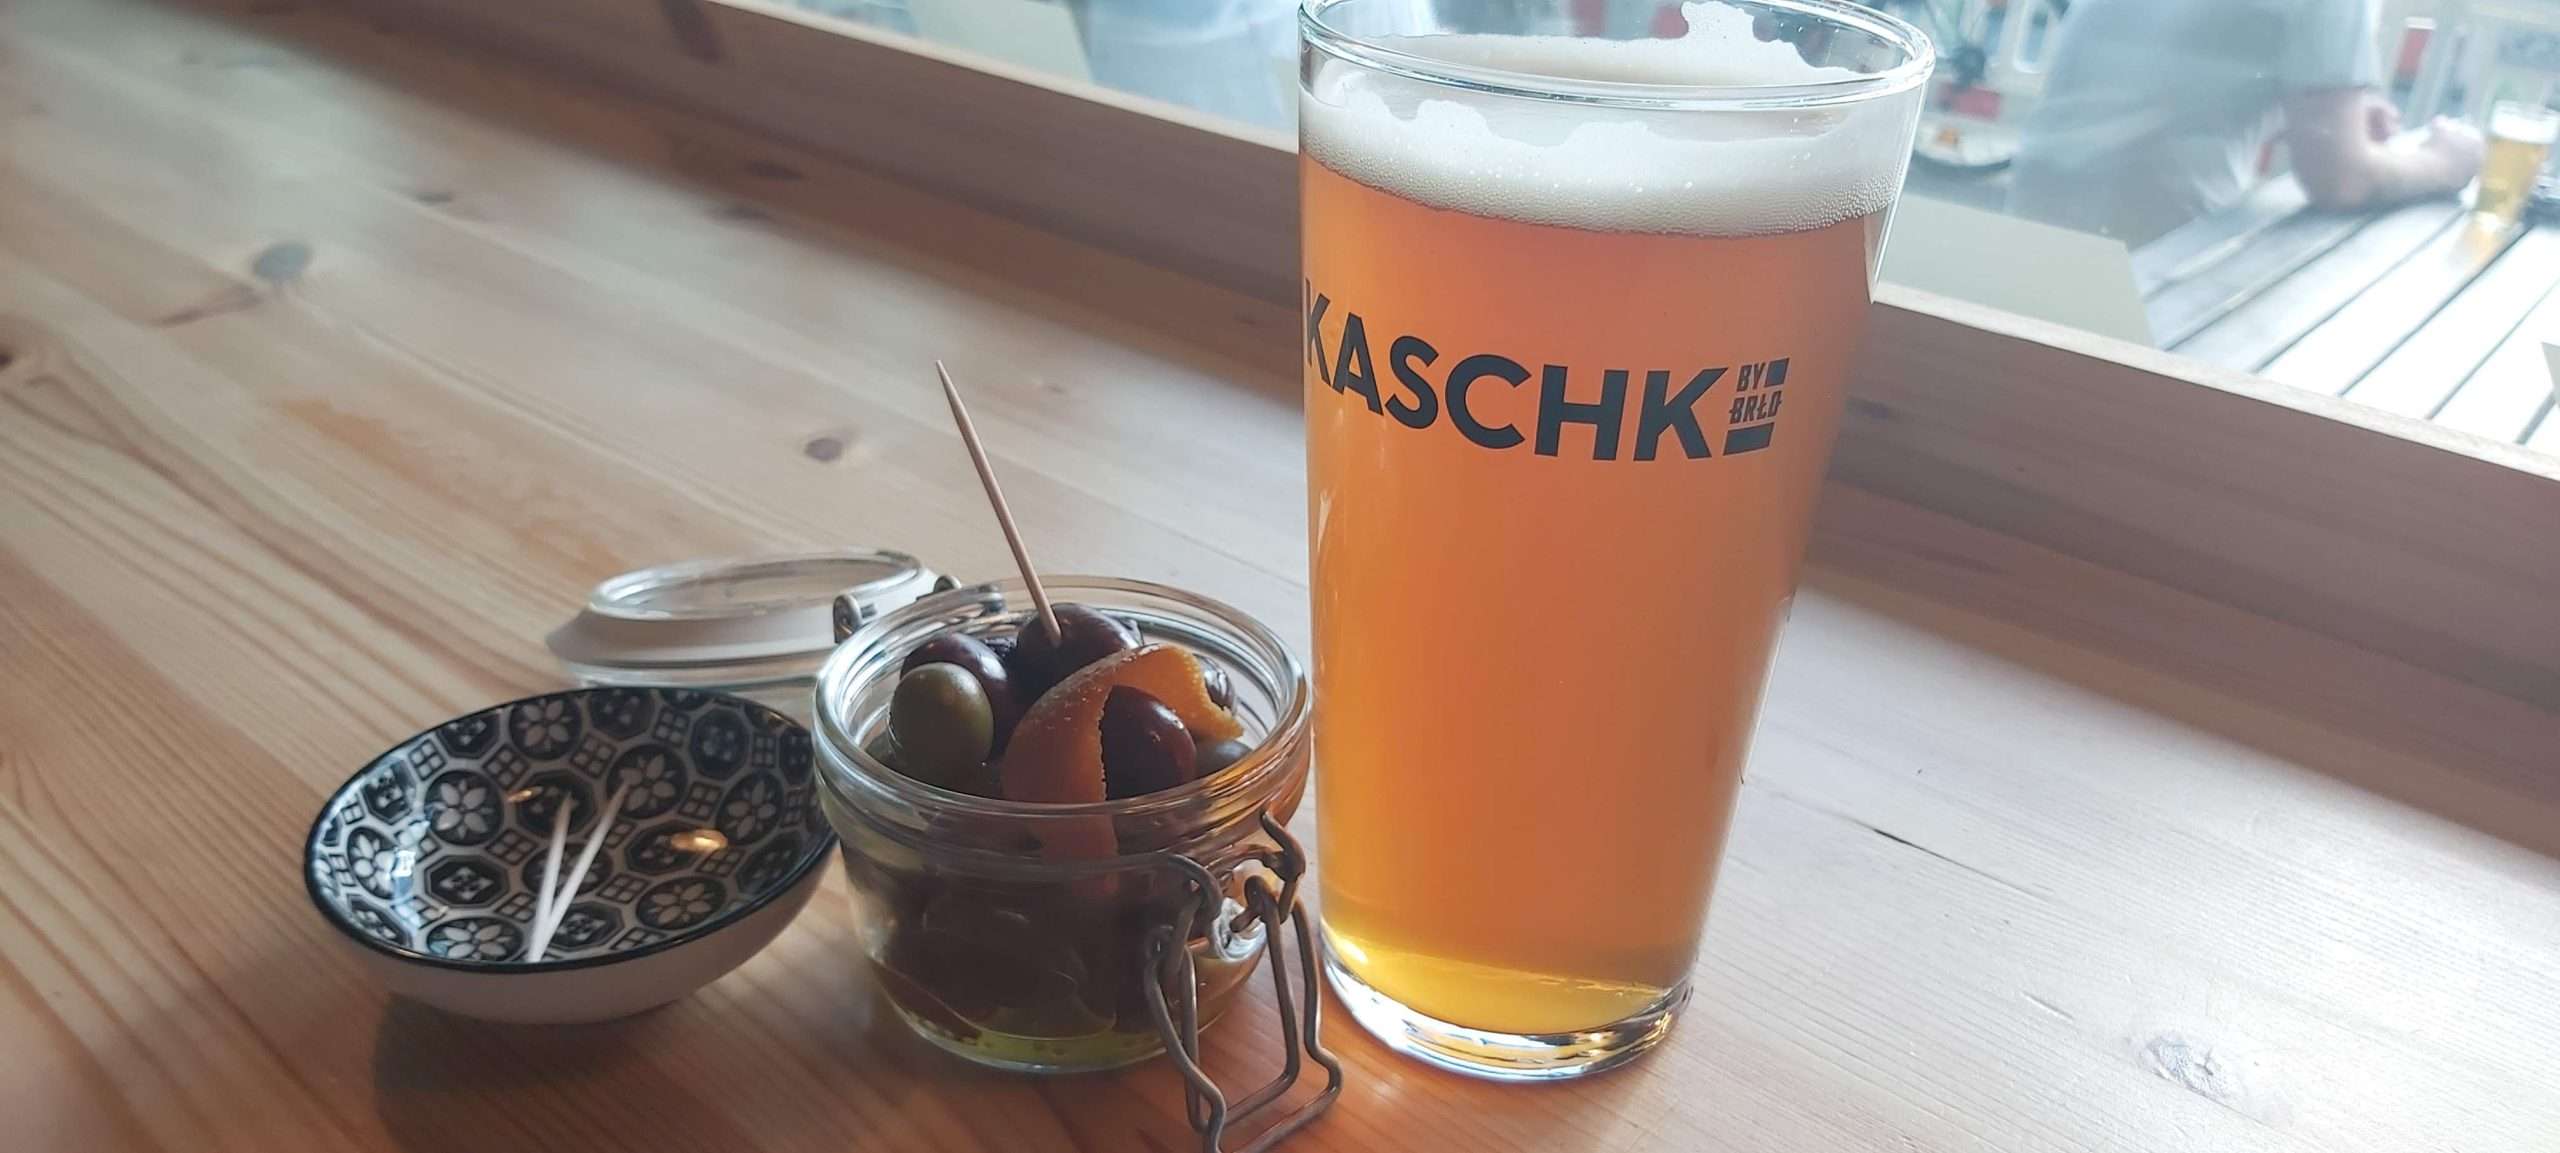 Beer and tapas at Kaschk craft beer bar in Berlin